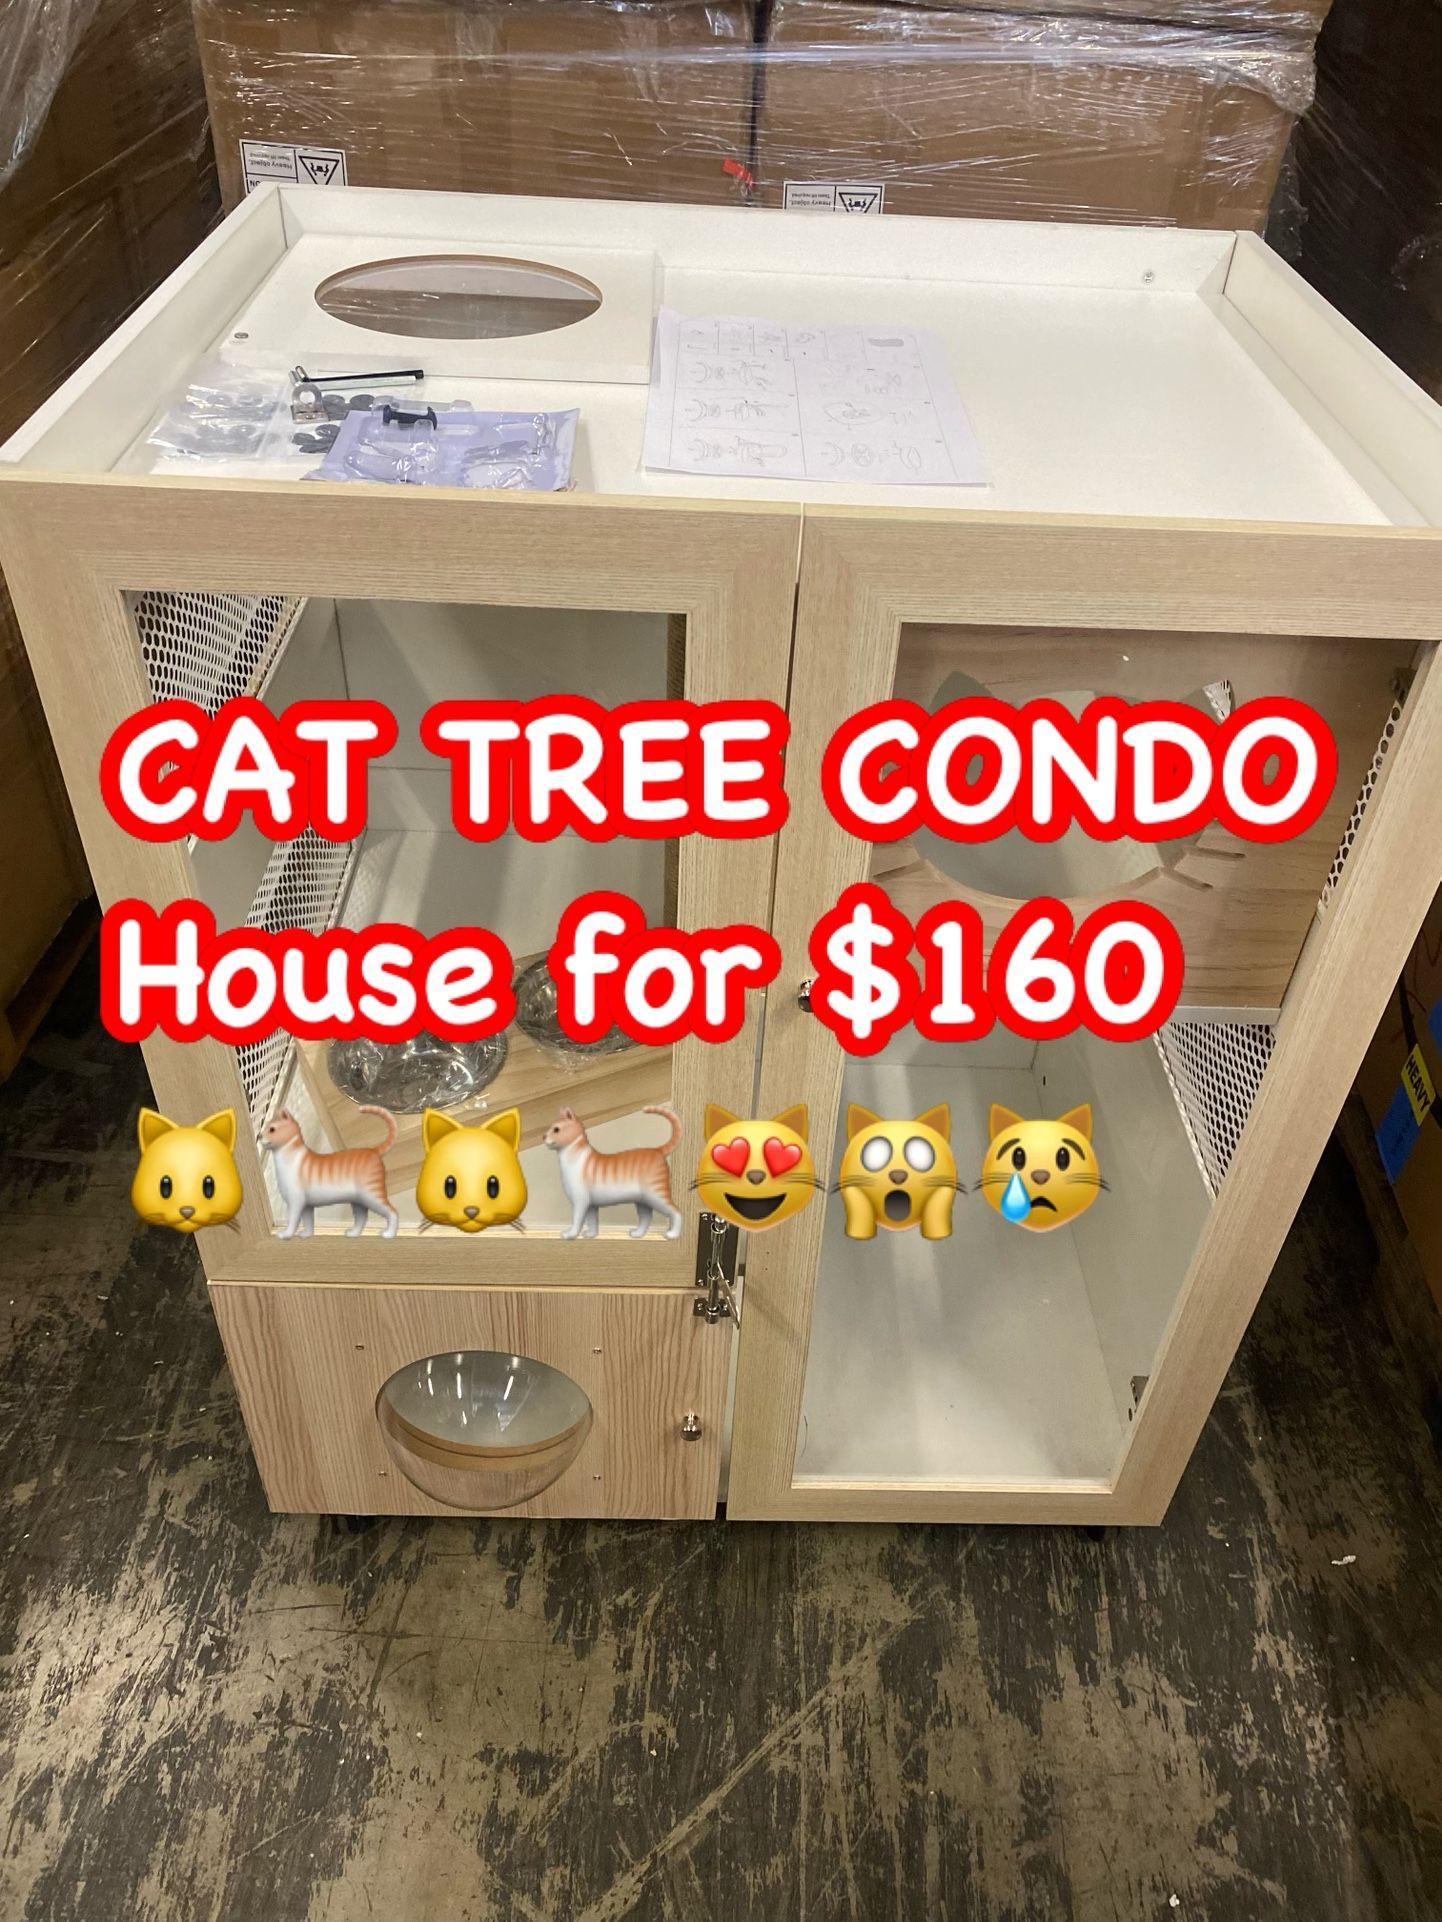 Brand New Luxury Cat Tree Condo House Worth $400